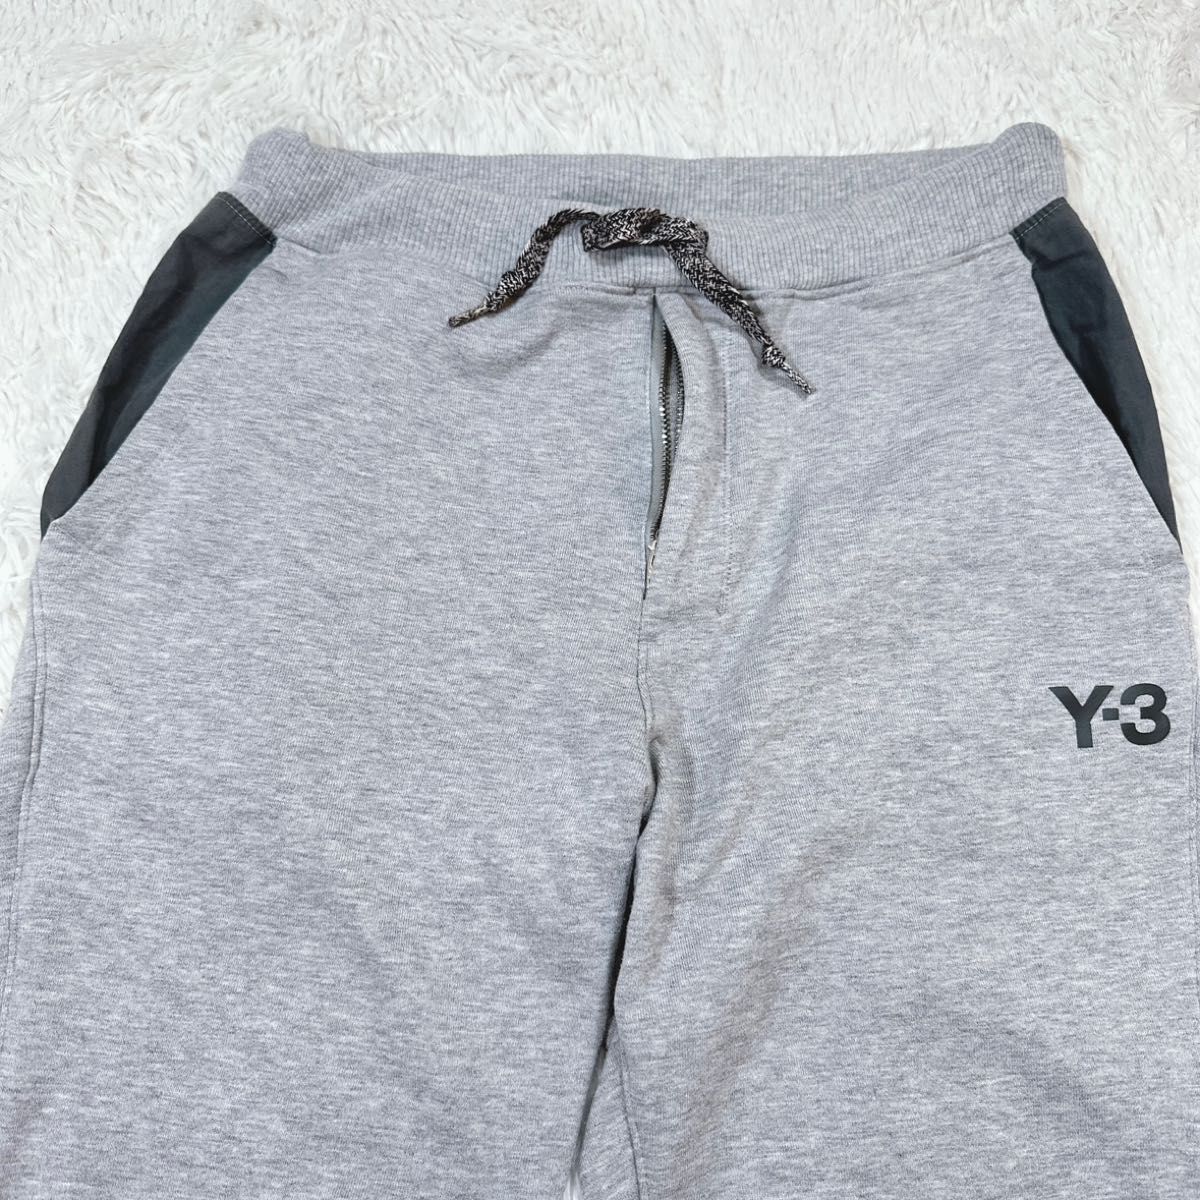 Y-3 ワイスリー adidas YOHJI YAMAMOTO スウェットパンツ